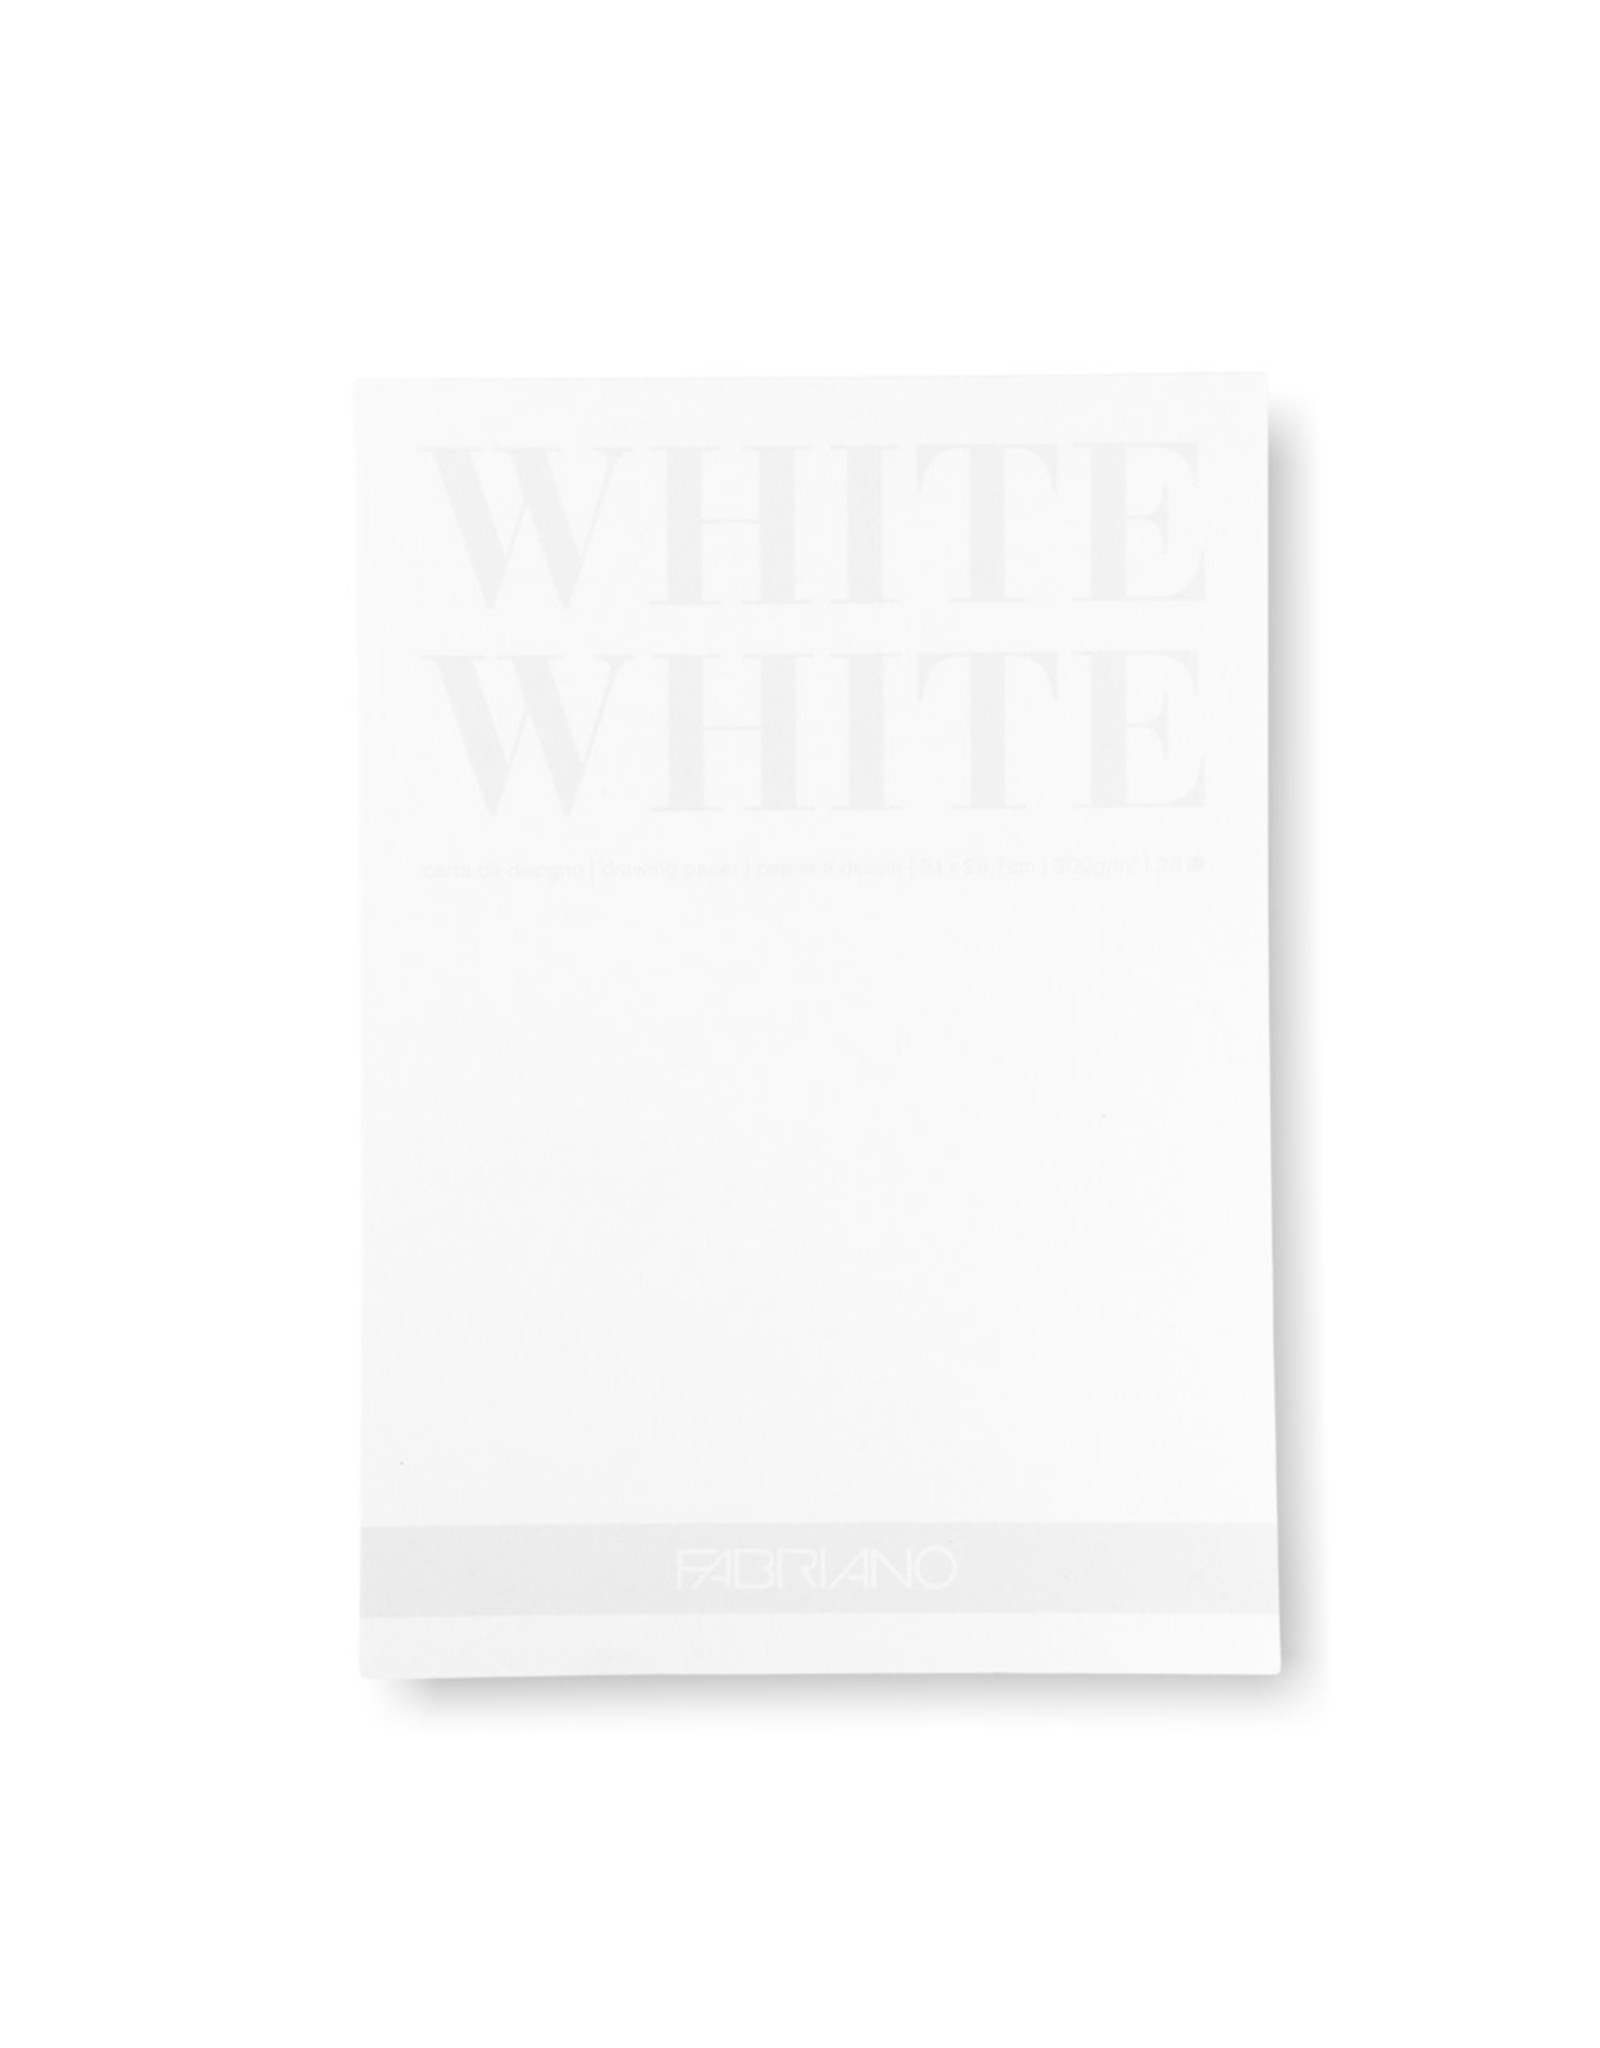 FABRIANO FABRIANO WHITE WHITE 8.5x12 PAD 20 SHEETS 300gms